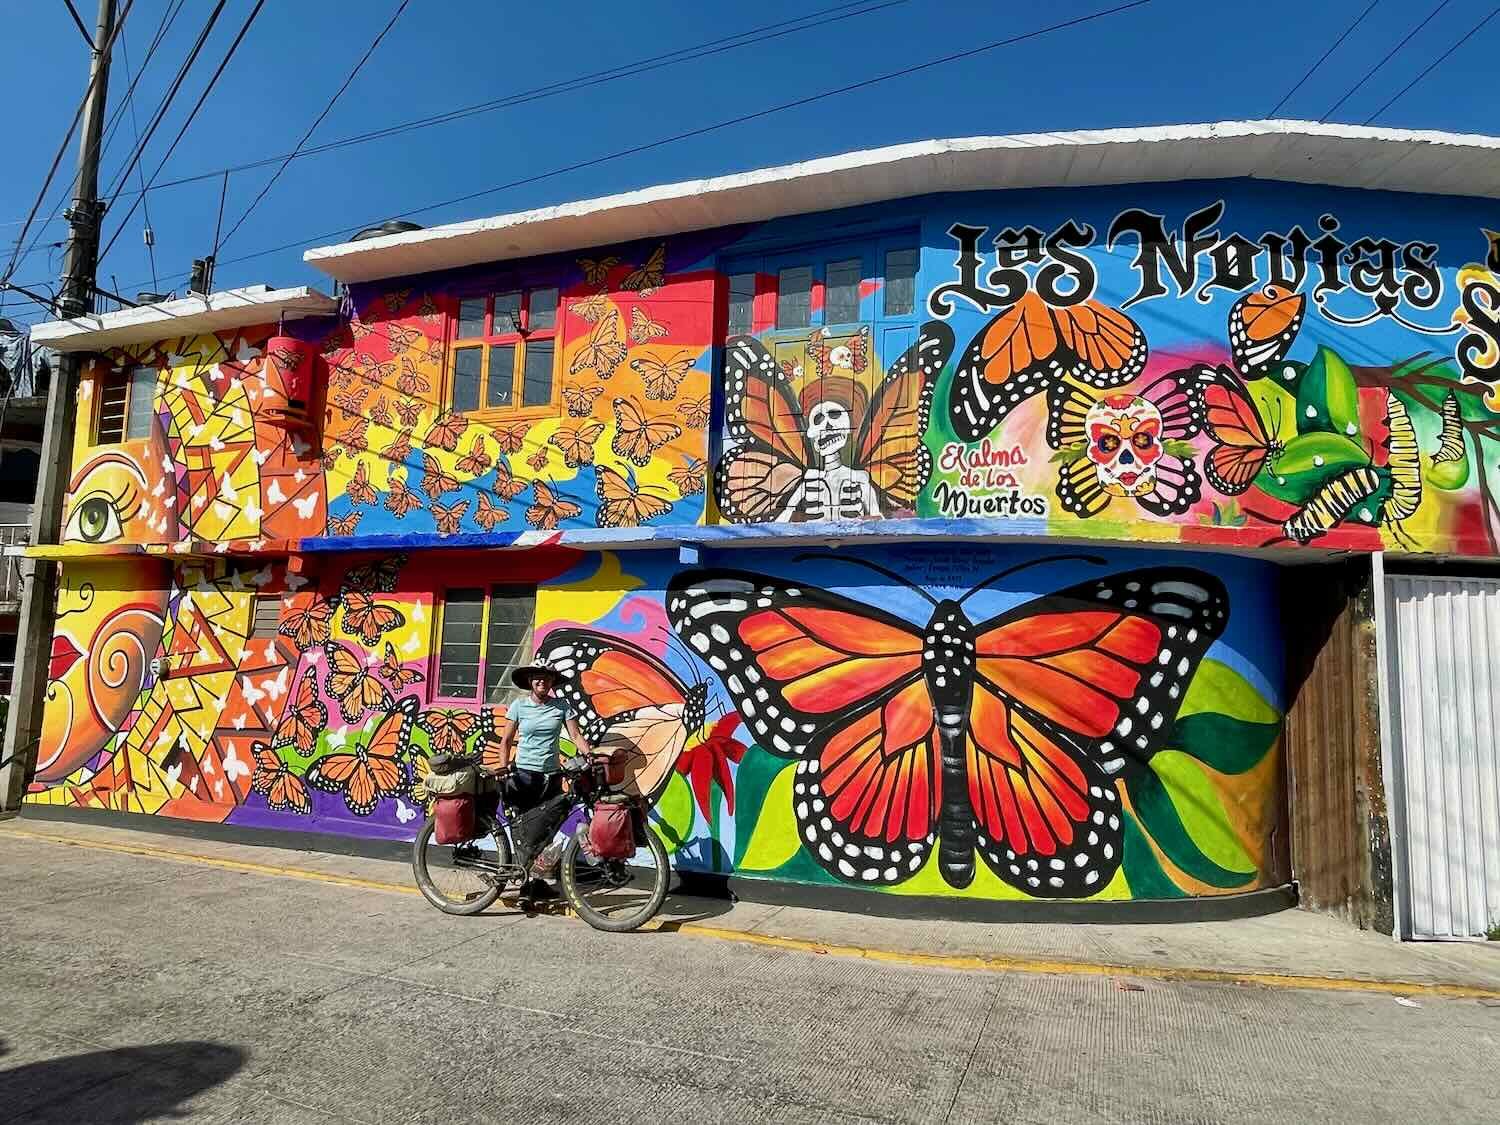 A dazzling monarch mural